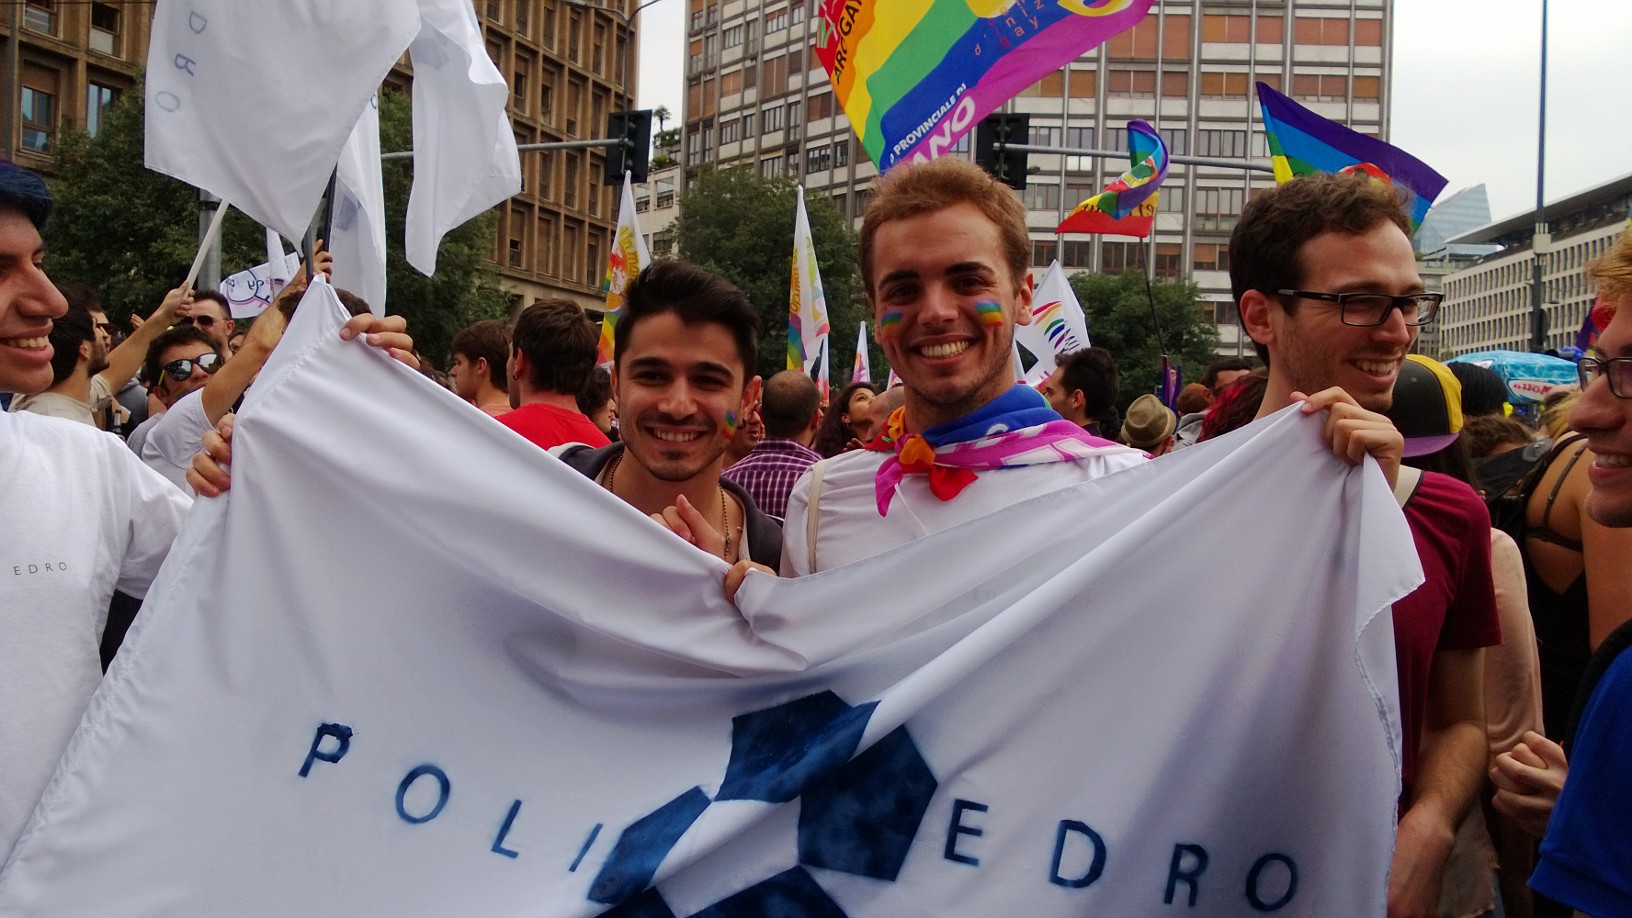 PoliEdro at Milano Pride 2013